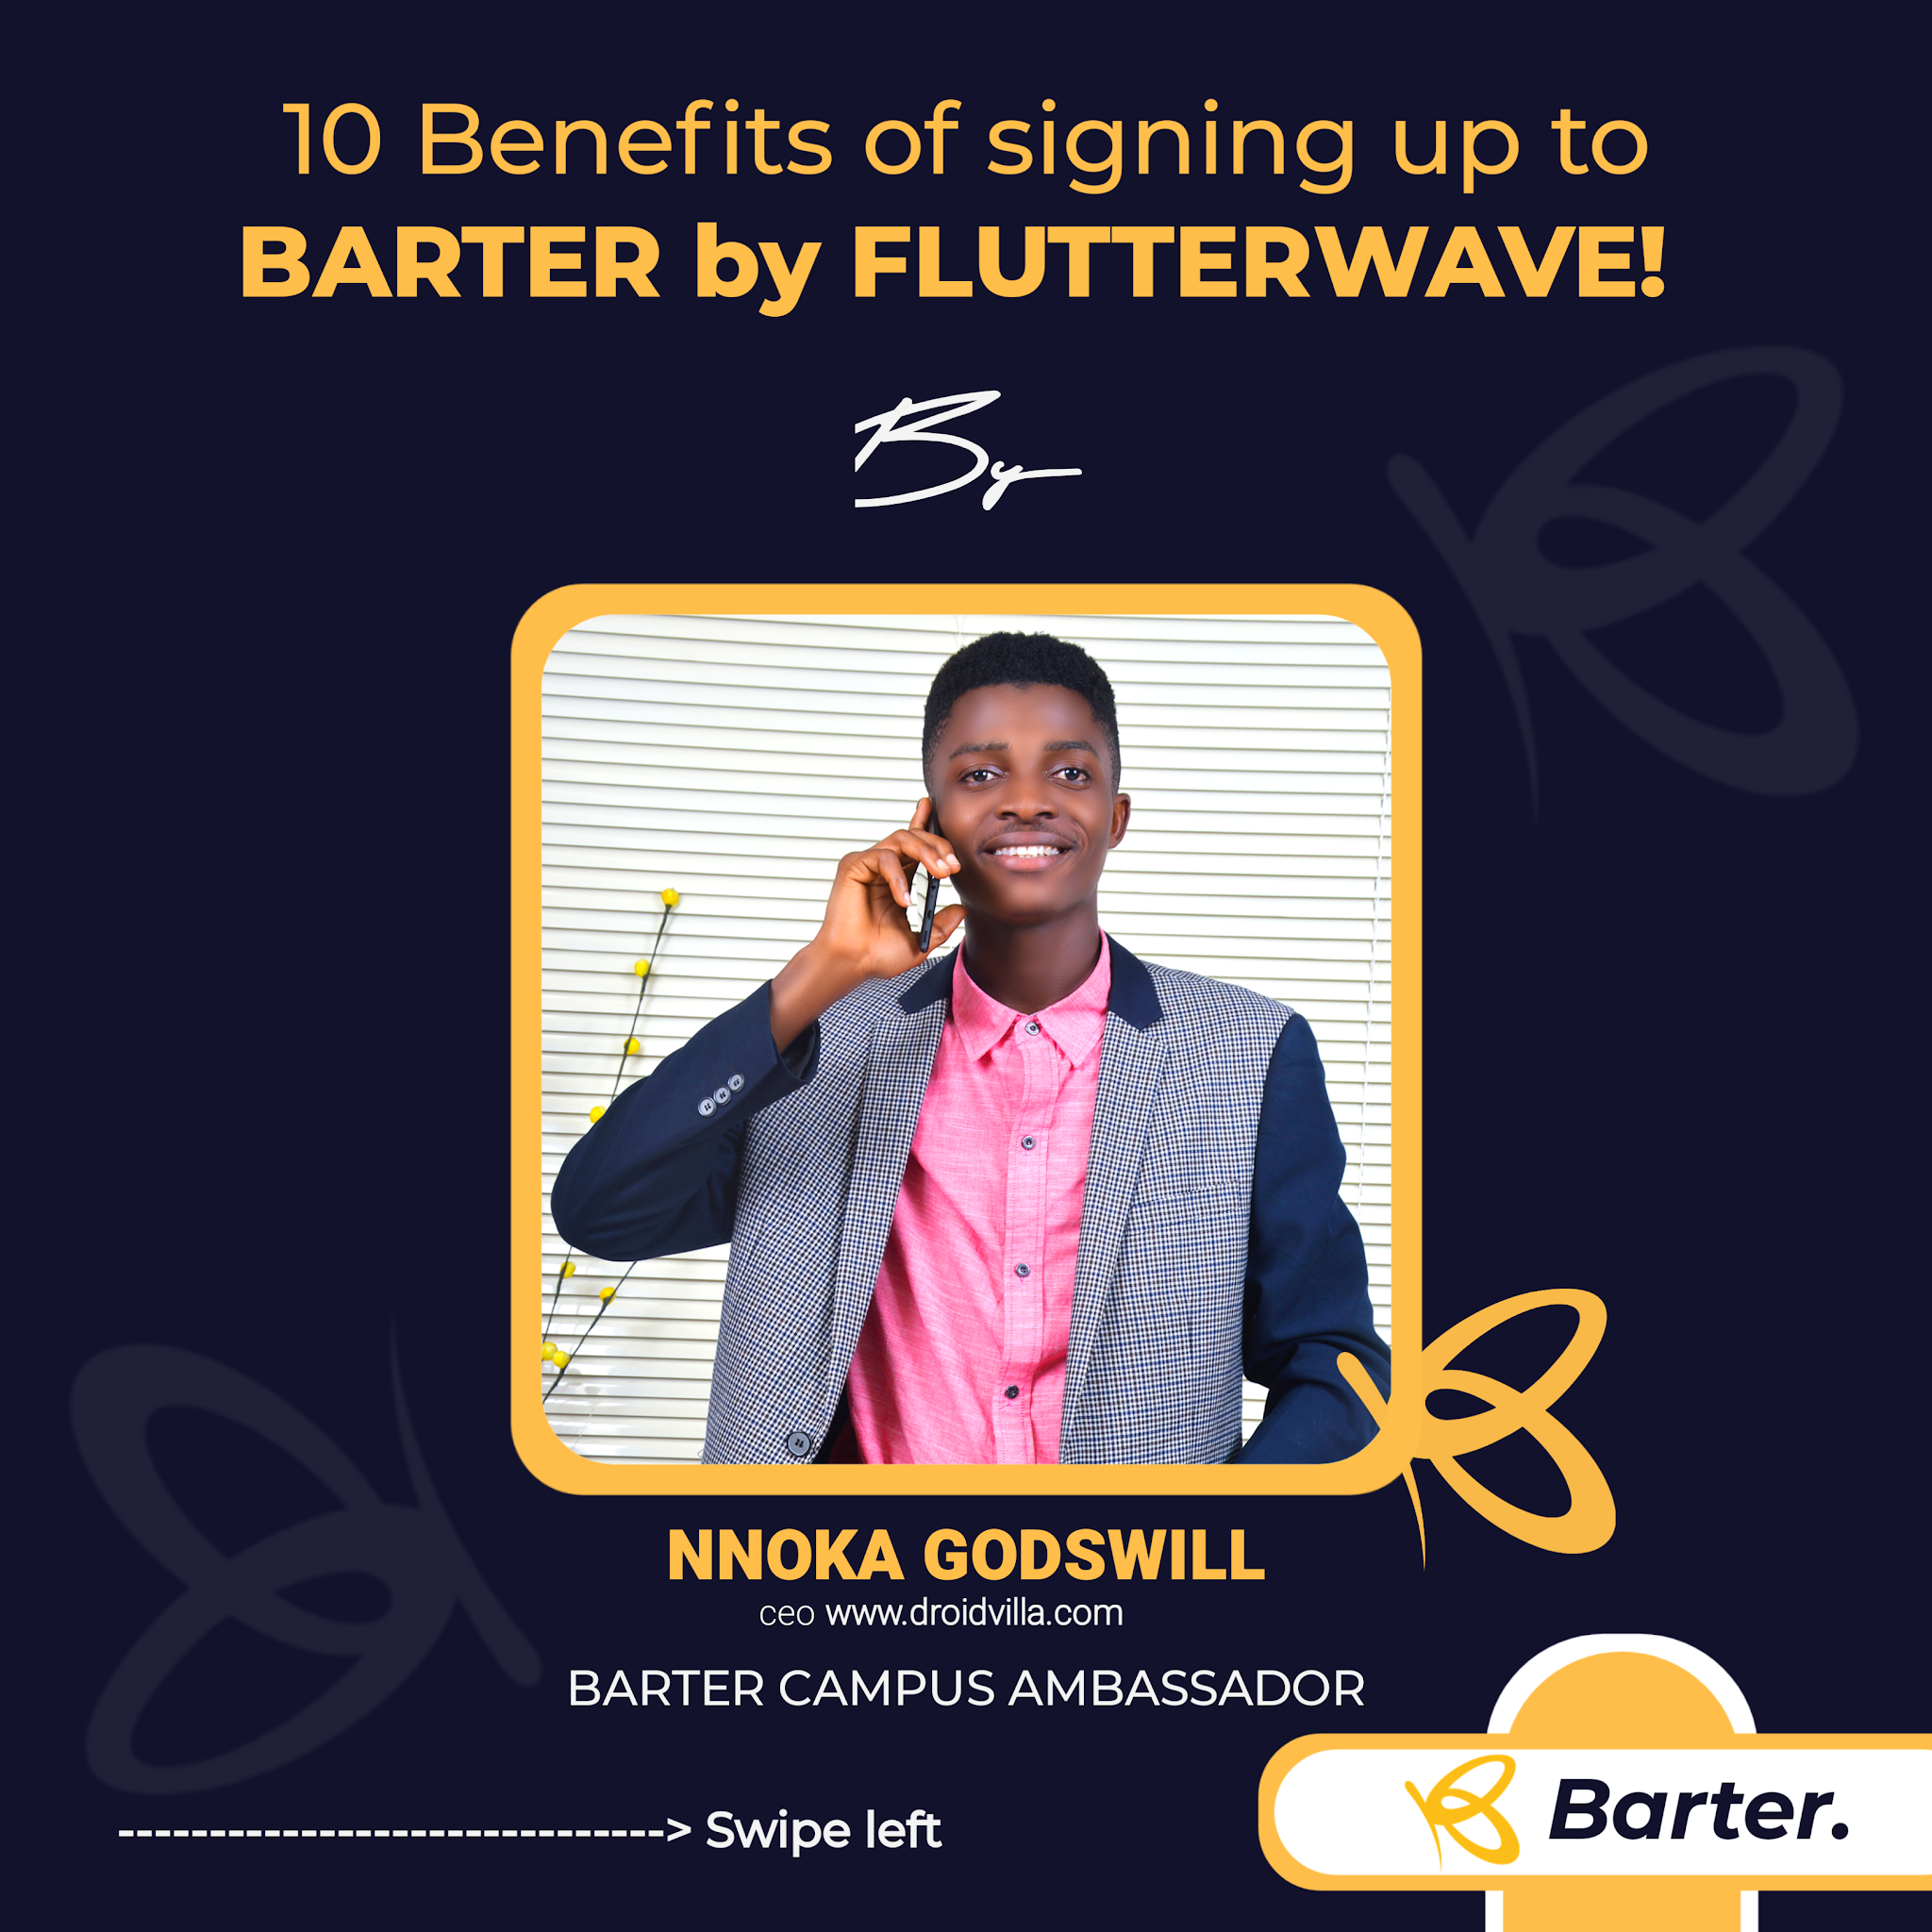 Benefits of using getbarter mobile app by Flutterwave